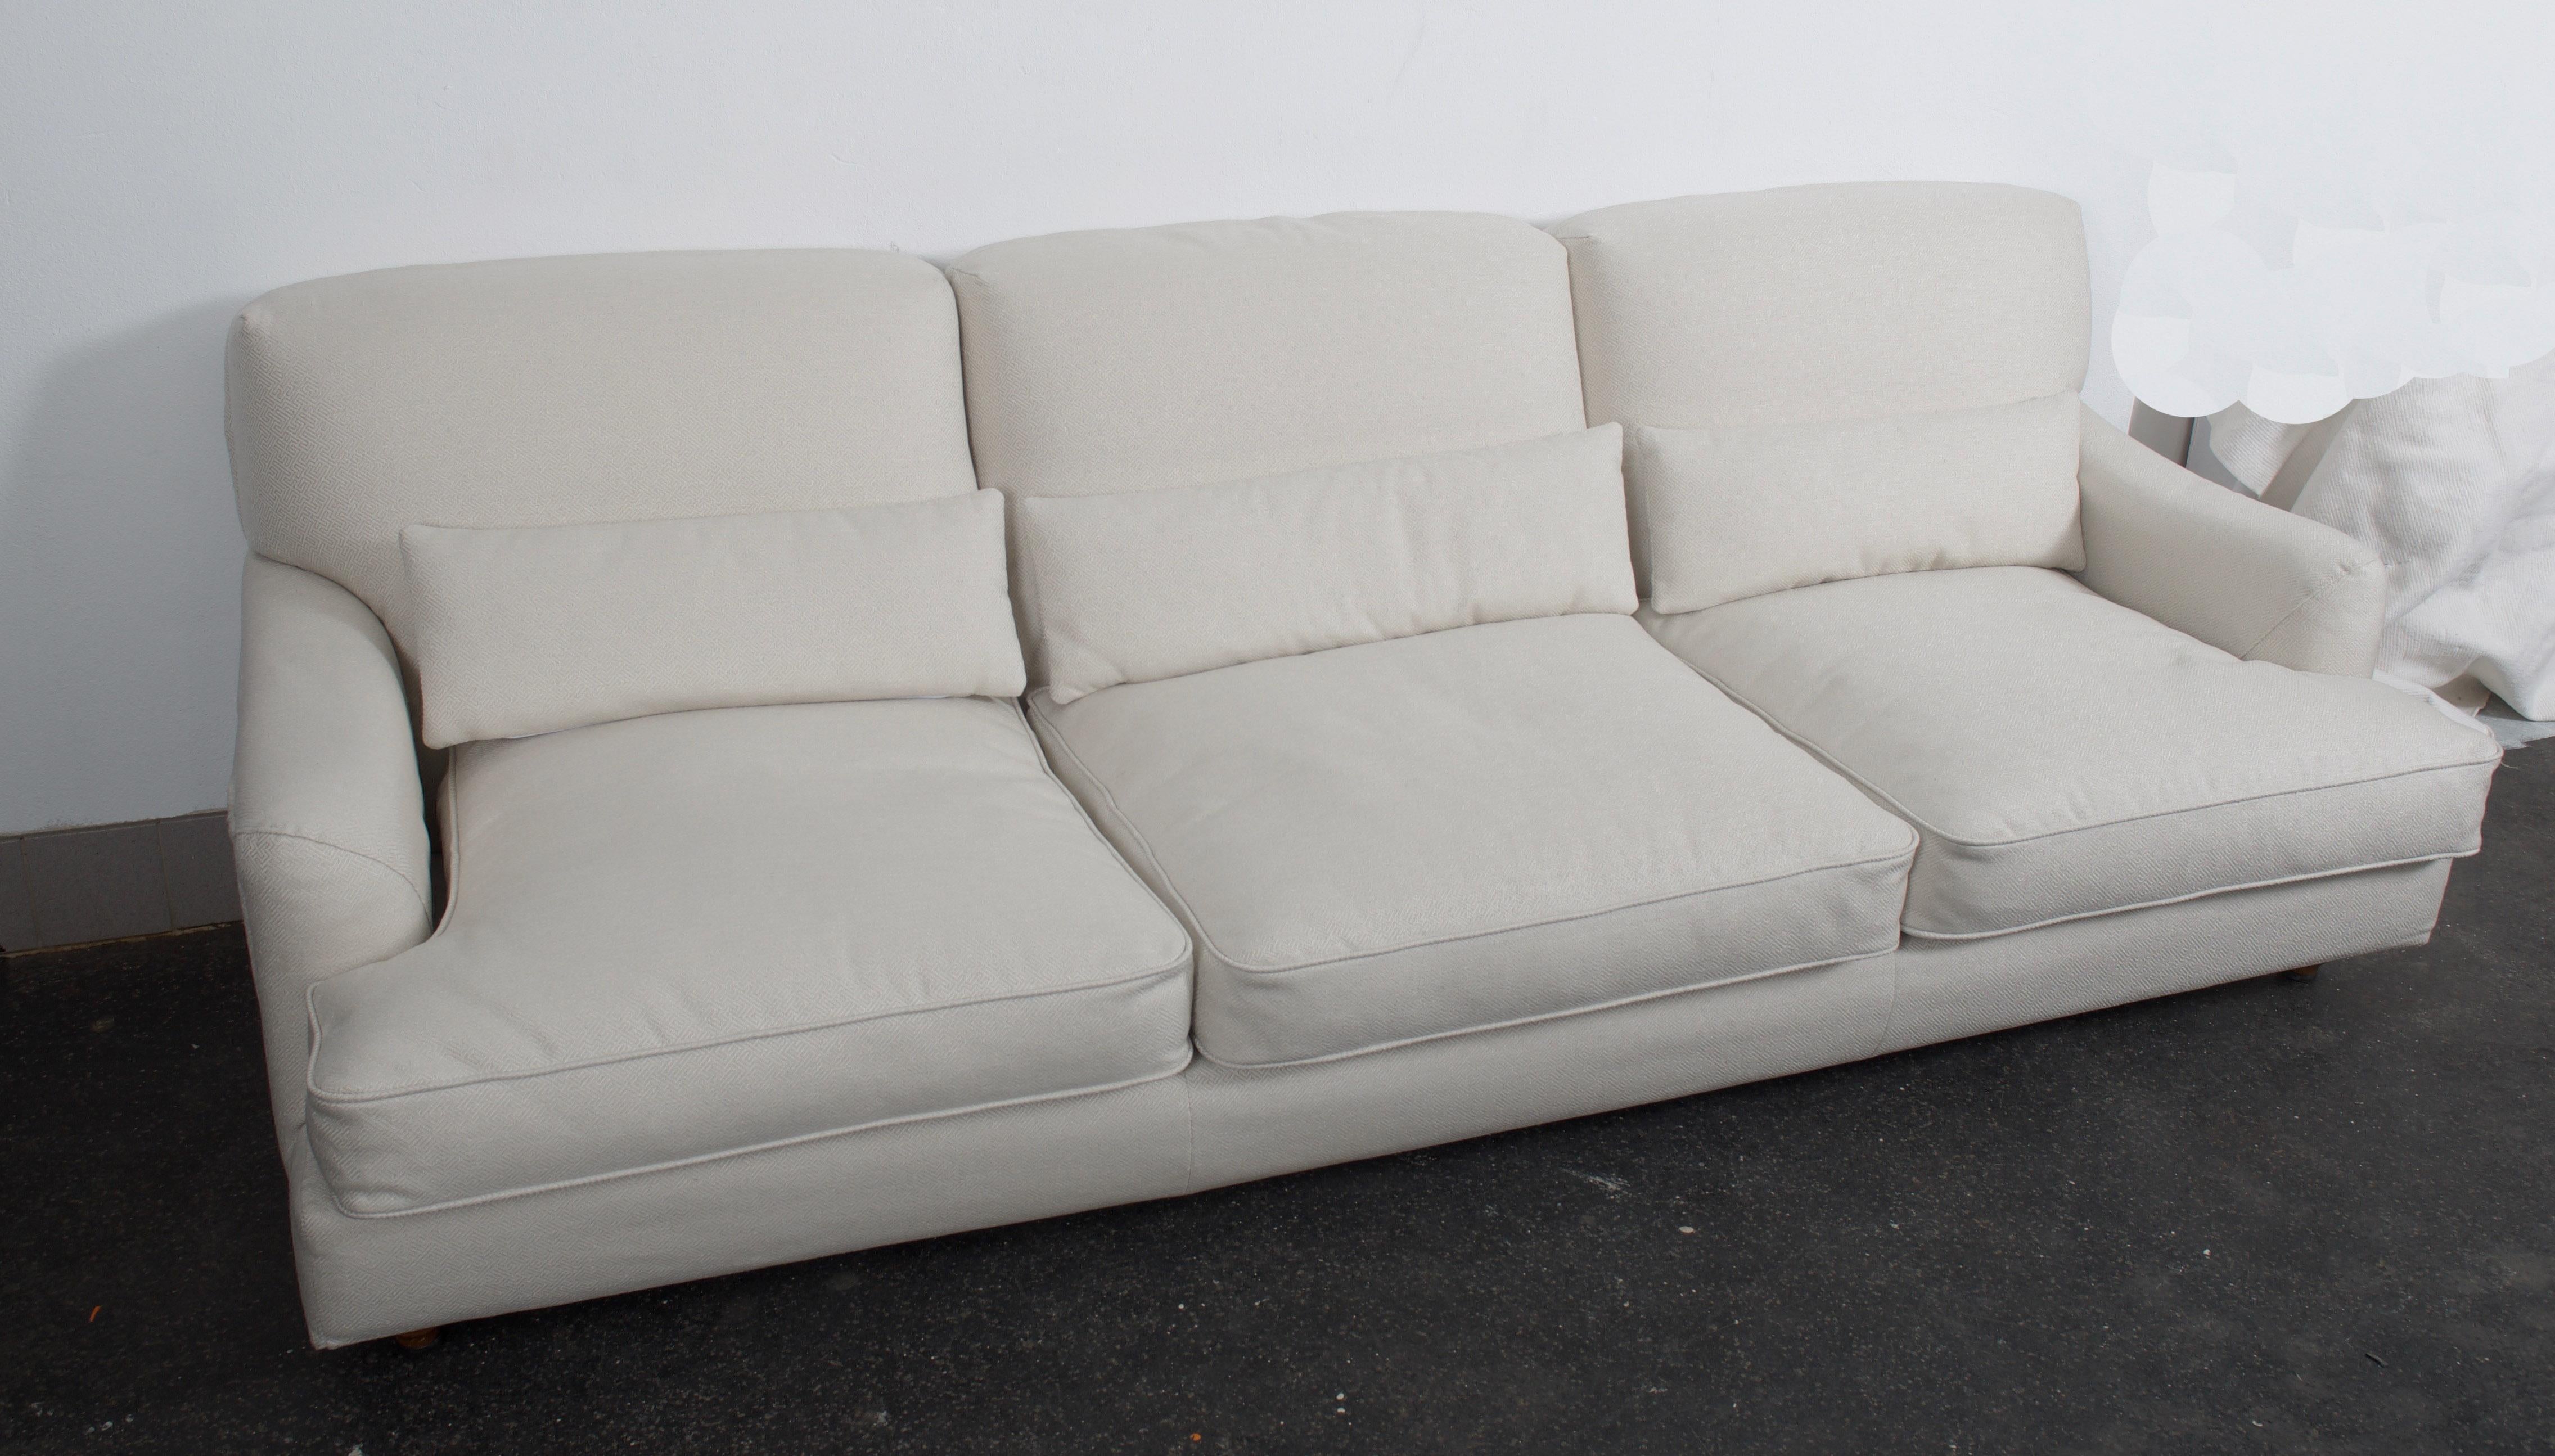 Vico Magistretti for Depadova Three-Seat Sofa Model Raffles For Sale 9